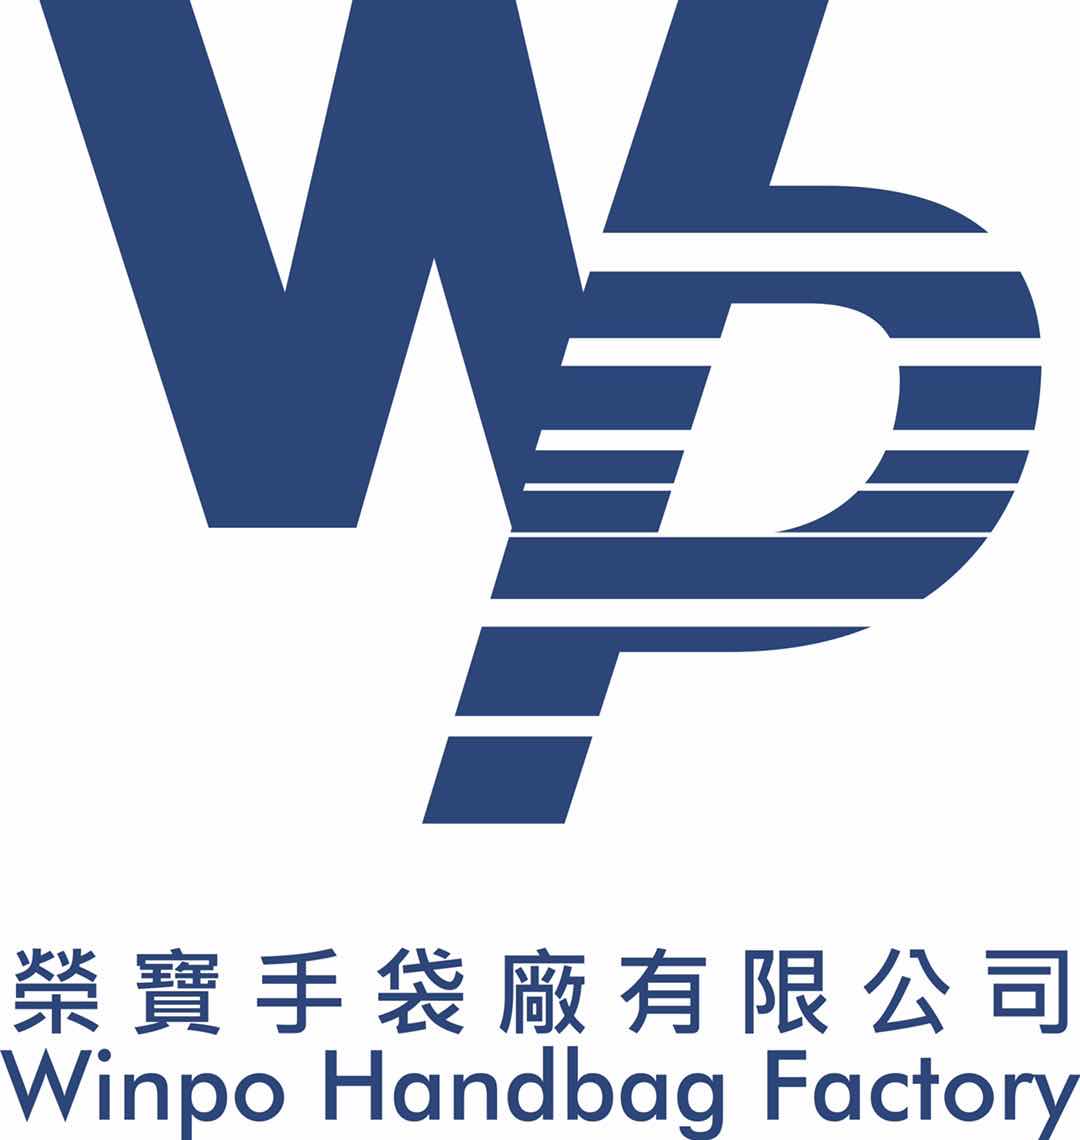 Winpo Handbag Factory